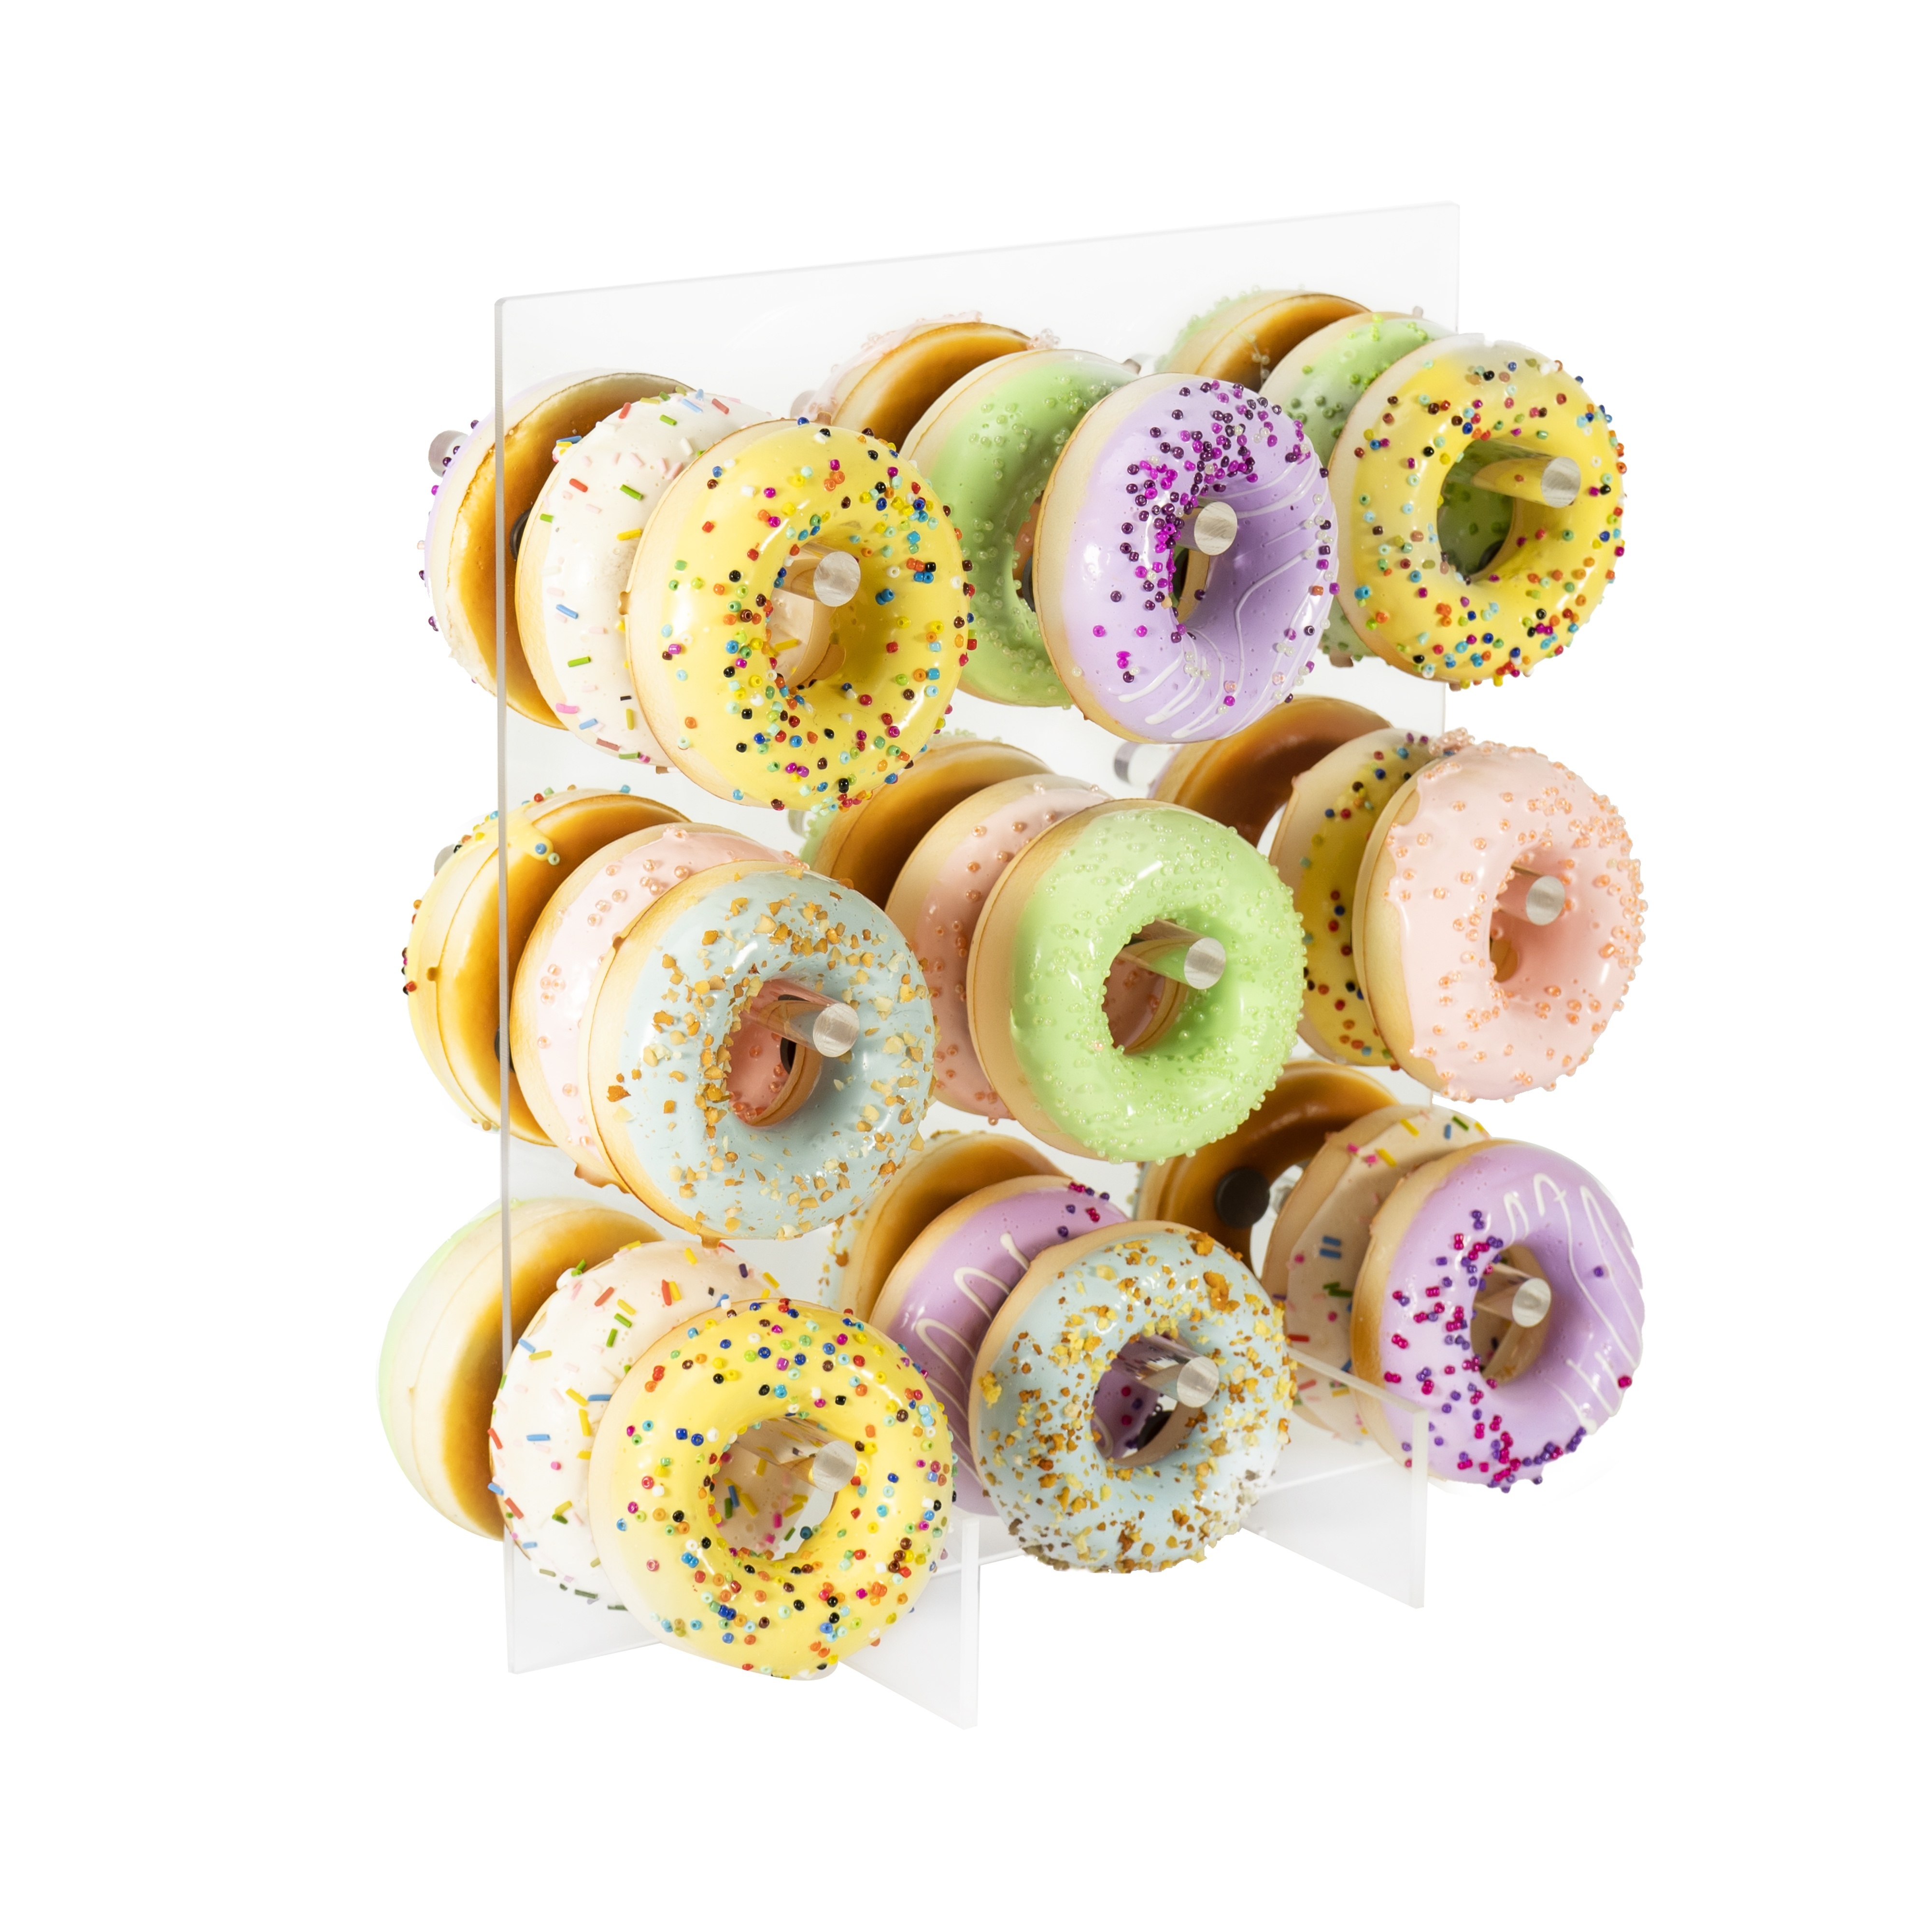 Nuevo soporte para donuts. Modelo pink gold. 10 donuts.